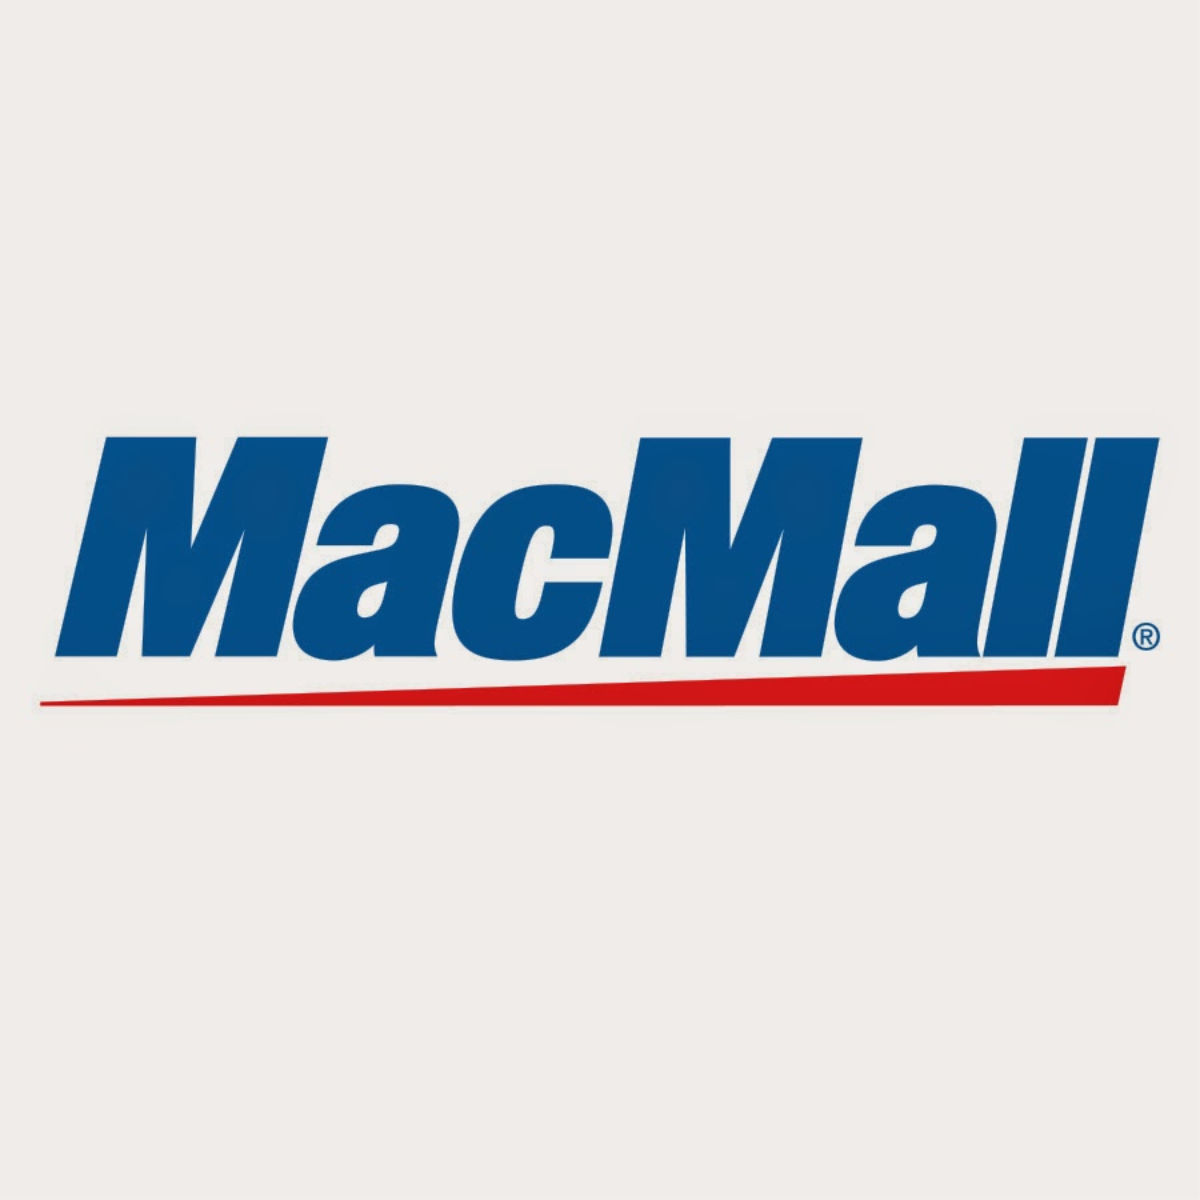 MacMall Logo